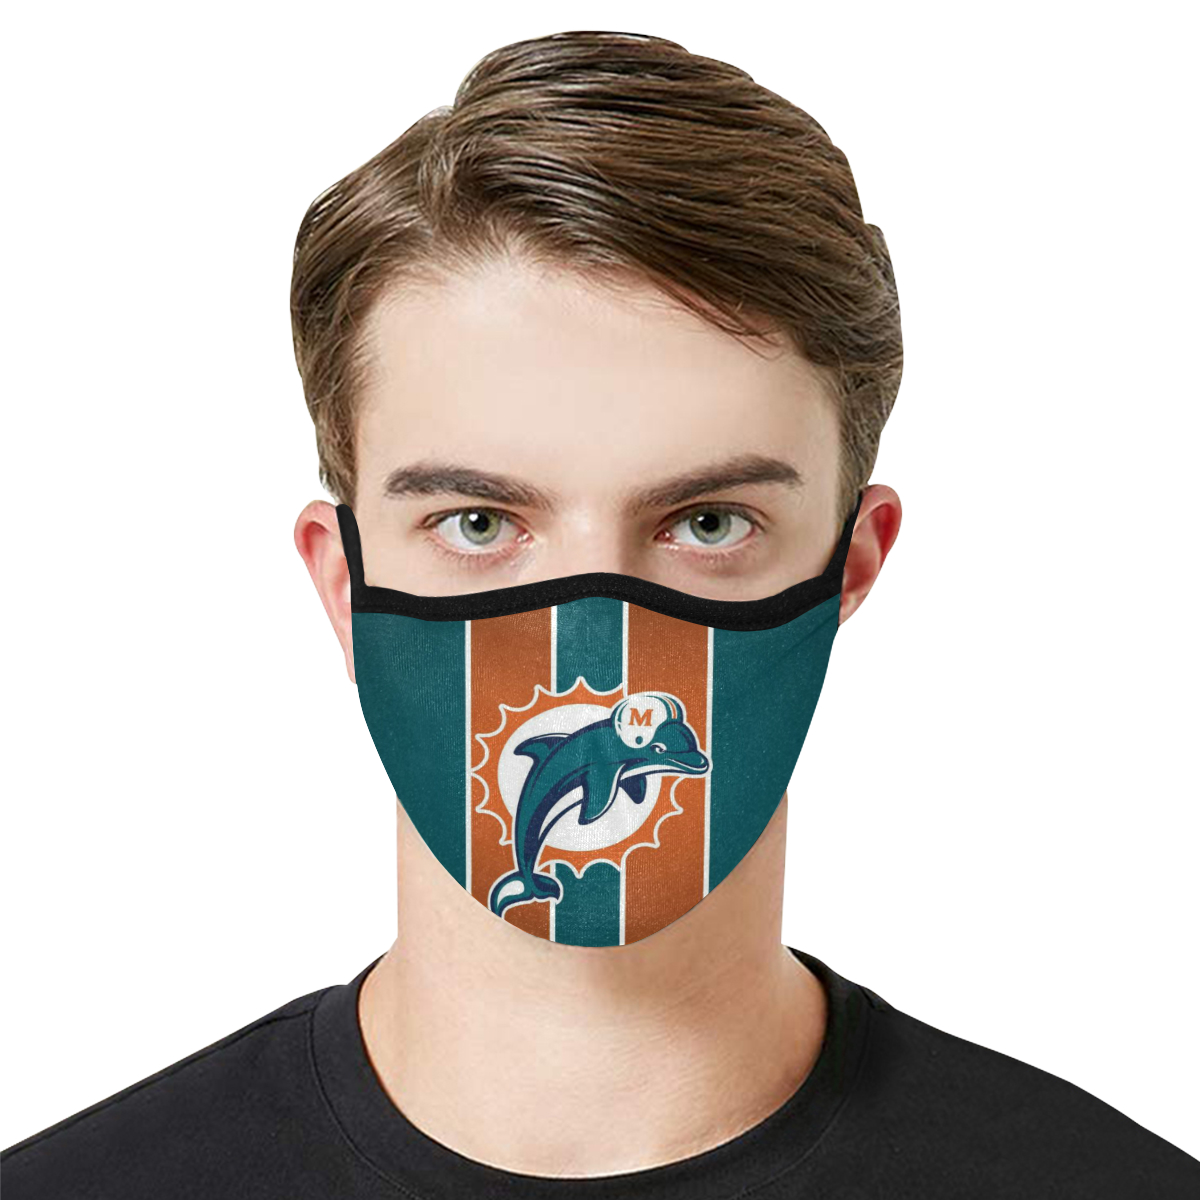 National football league miami dolphins team cotton face mask 2